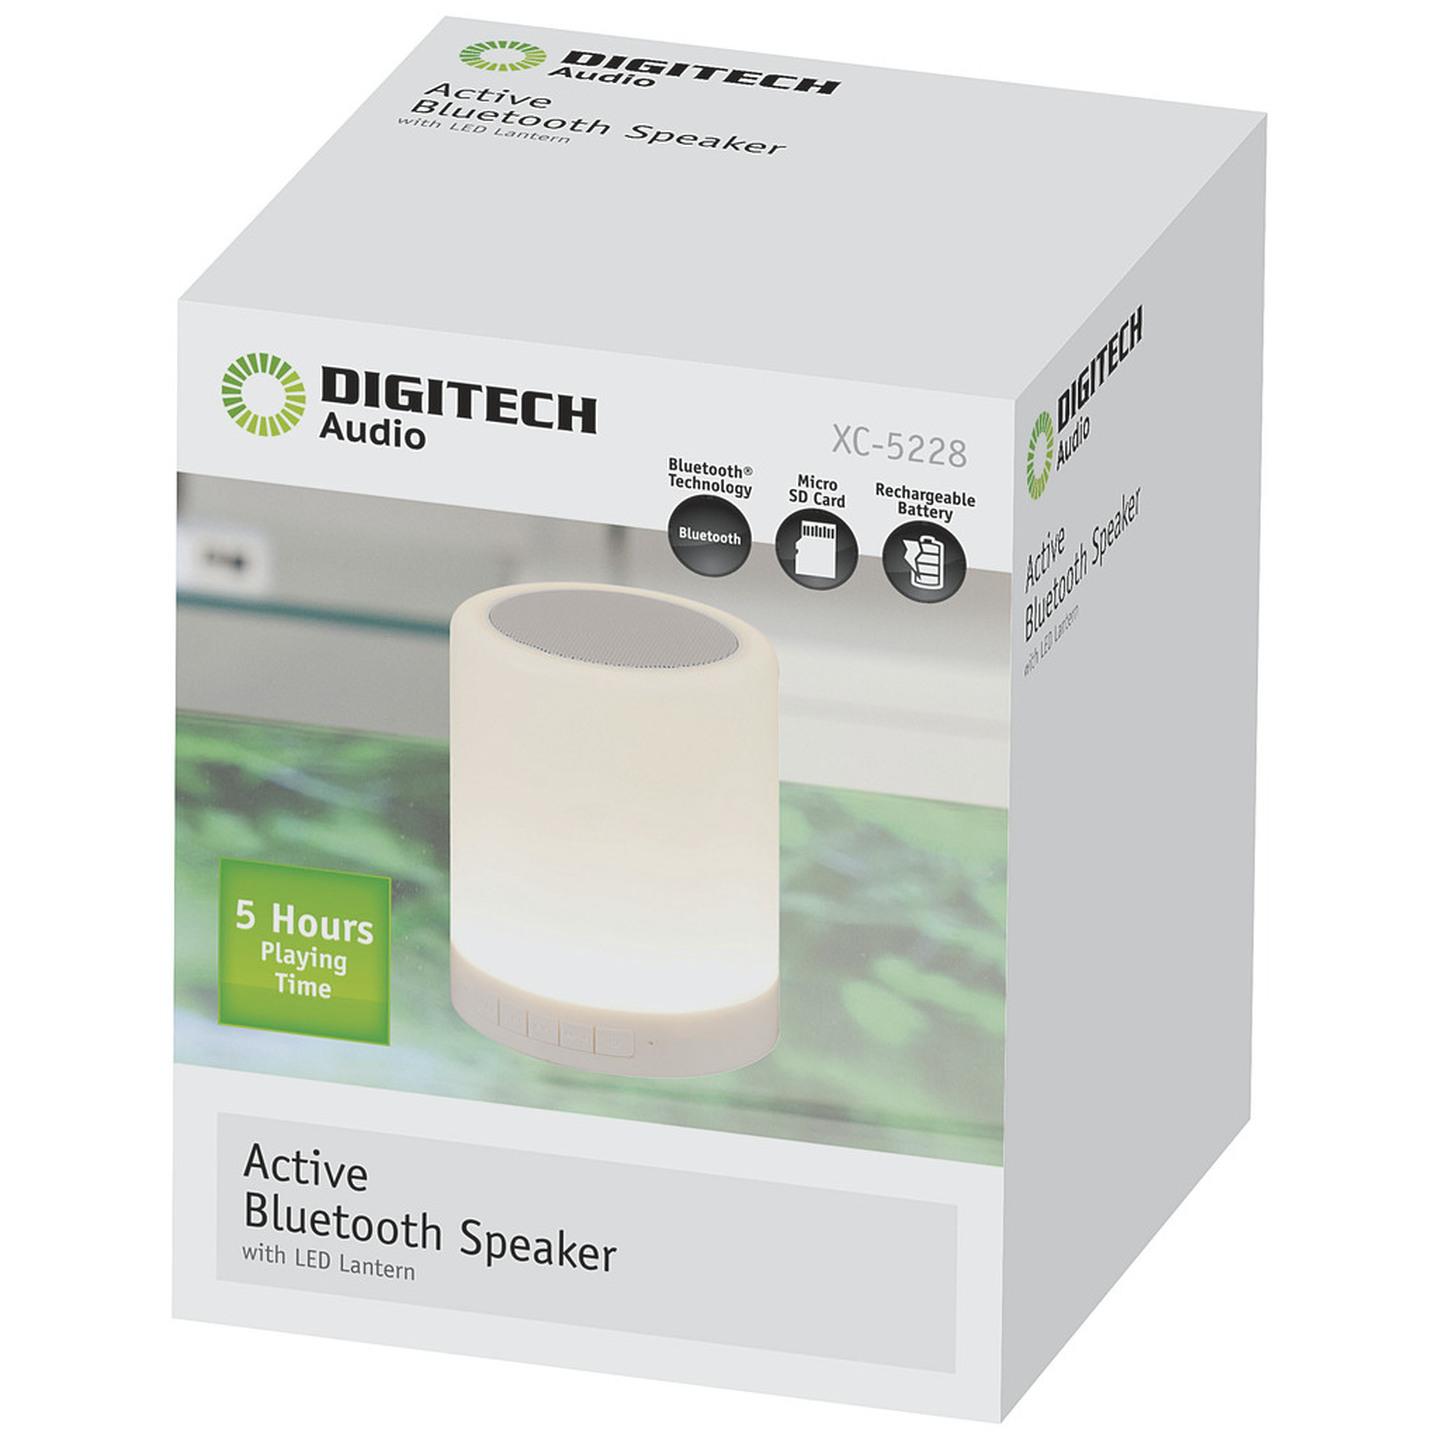 Active Bluetooth Speaker with LED Lantern